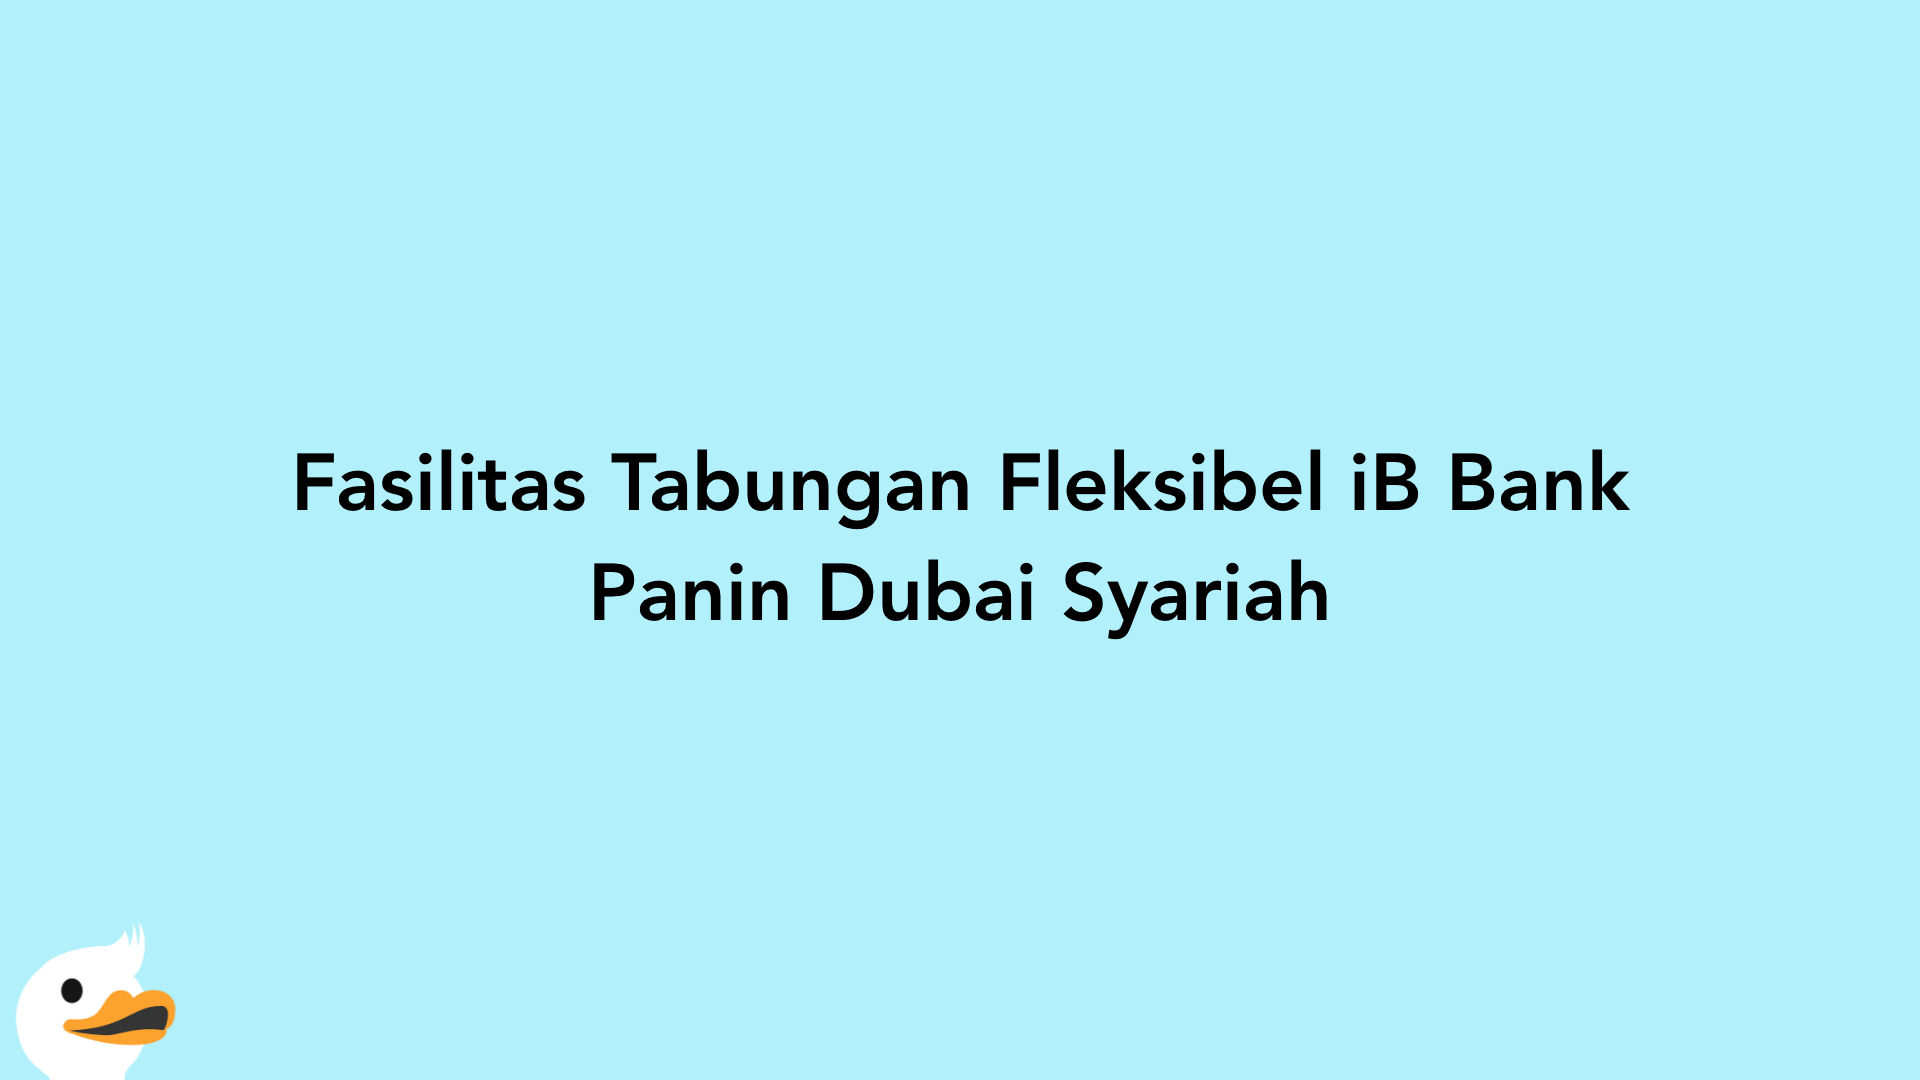 Fasilitas Tabungan Fleksibel iB Bank Panin Dubai Syariah